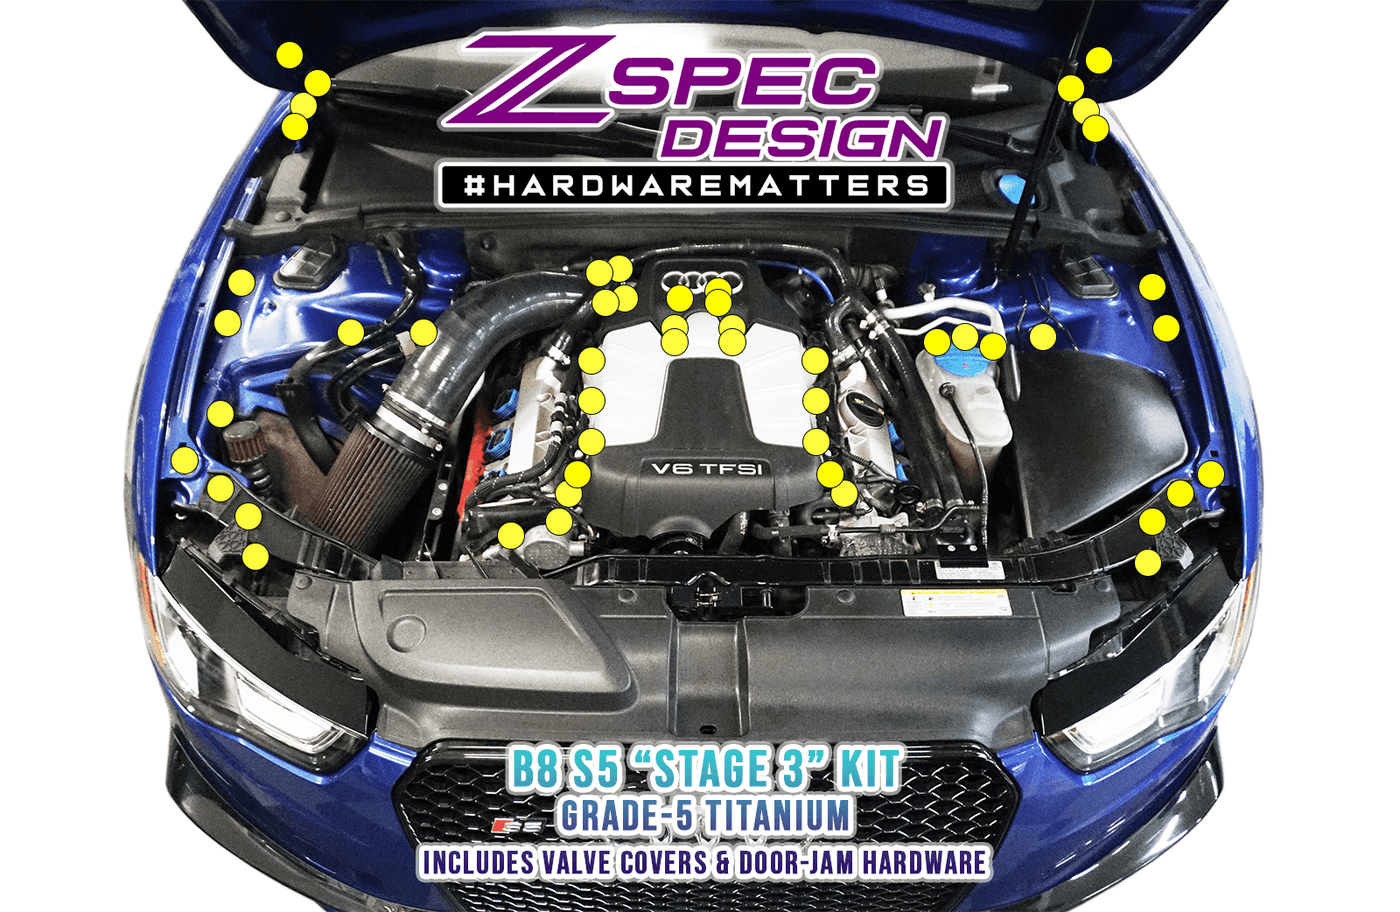 ZSPEC "Stage 3" Dress Up Bolts® Fastener Kit for Audi S5 B8 3.0L, Titanium Grade-5  Bagged/Labeled by Function  Keywords Engine Bay Hardware Upgrade Performance ZSPEC Design LLC Car Auto Hobby  Garage